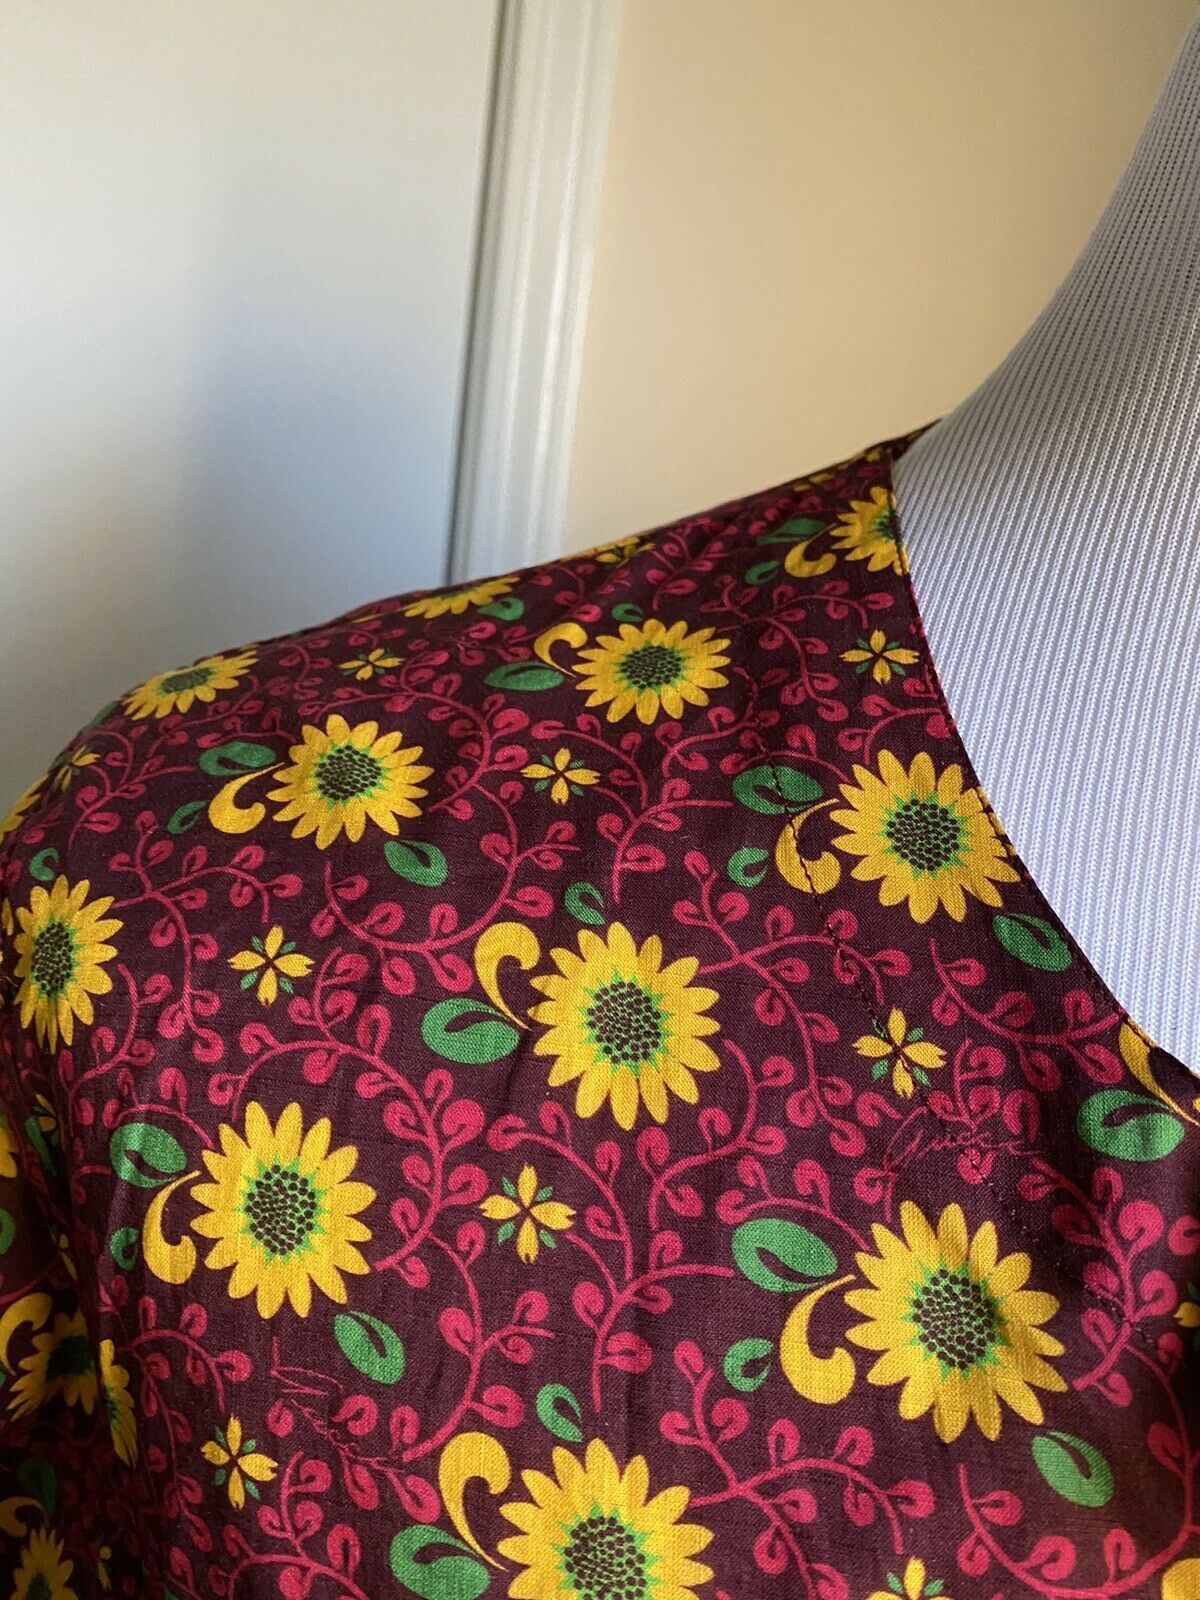 Neues Gucci Sunflower on Mublin Shirt Gelb/Rot Größe L (50 Eu) Italien